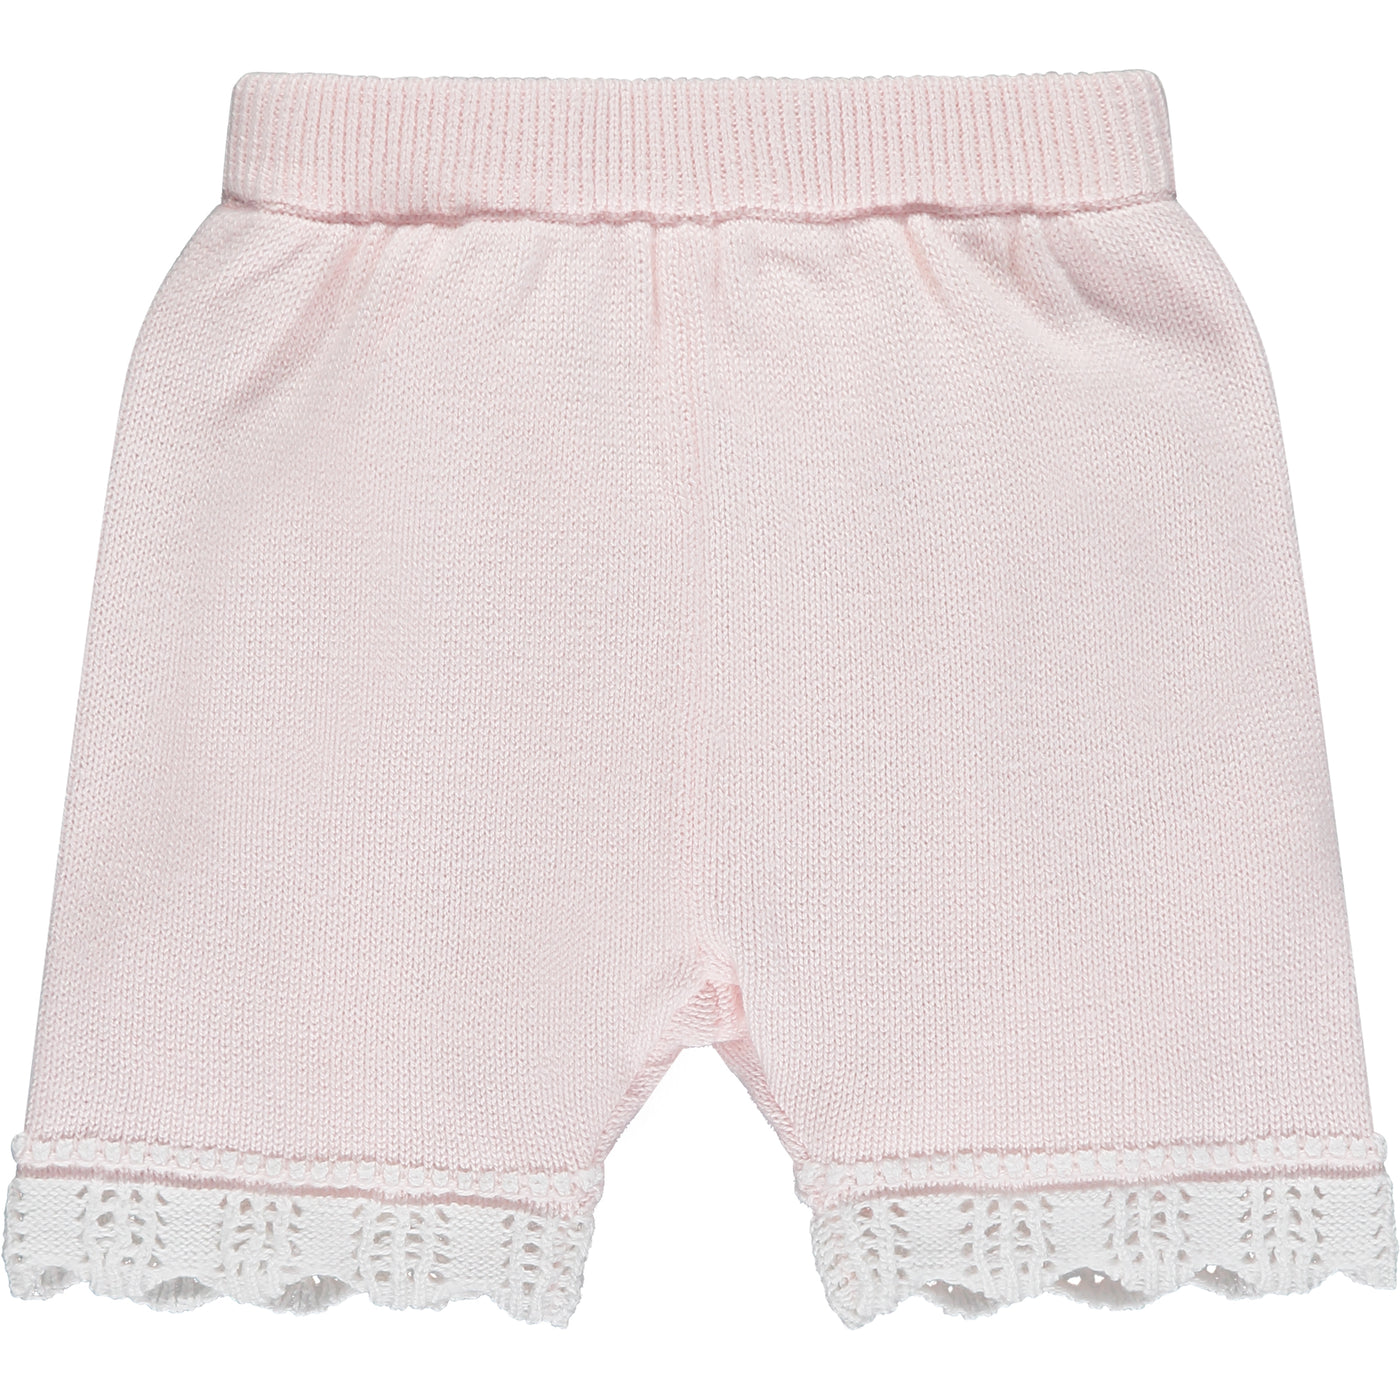 Davina Knit Girls Top & Shorts Set